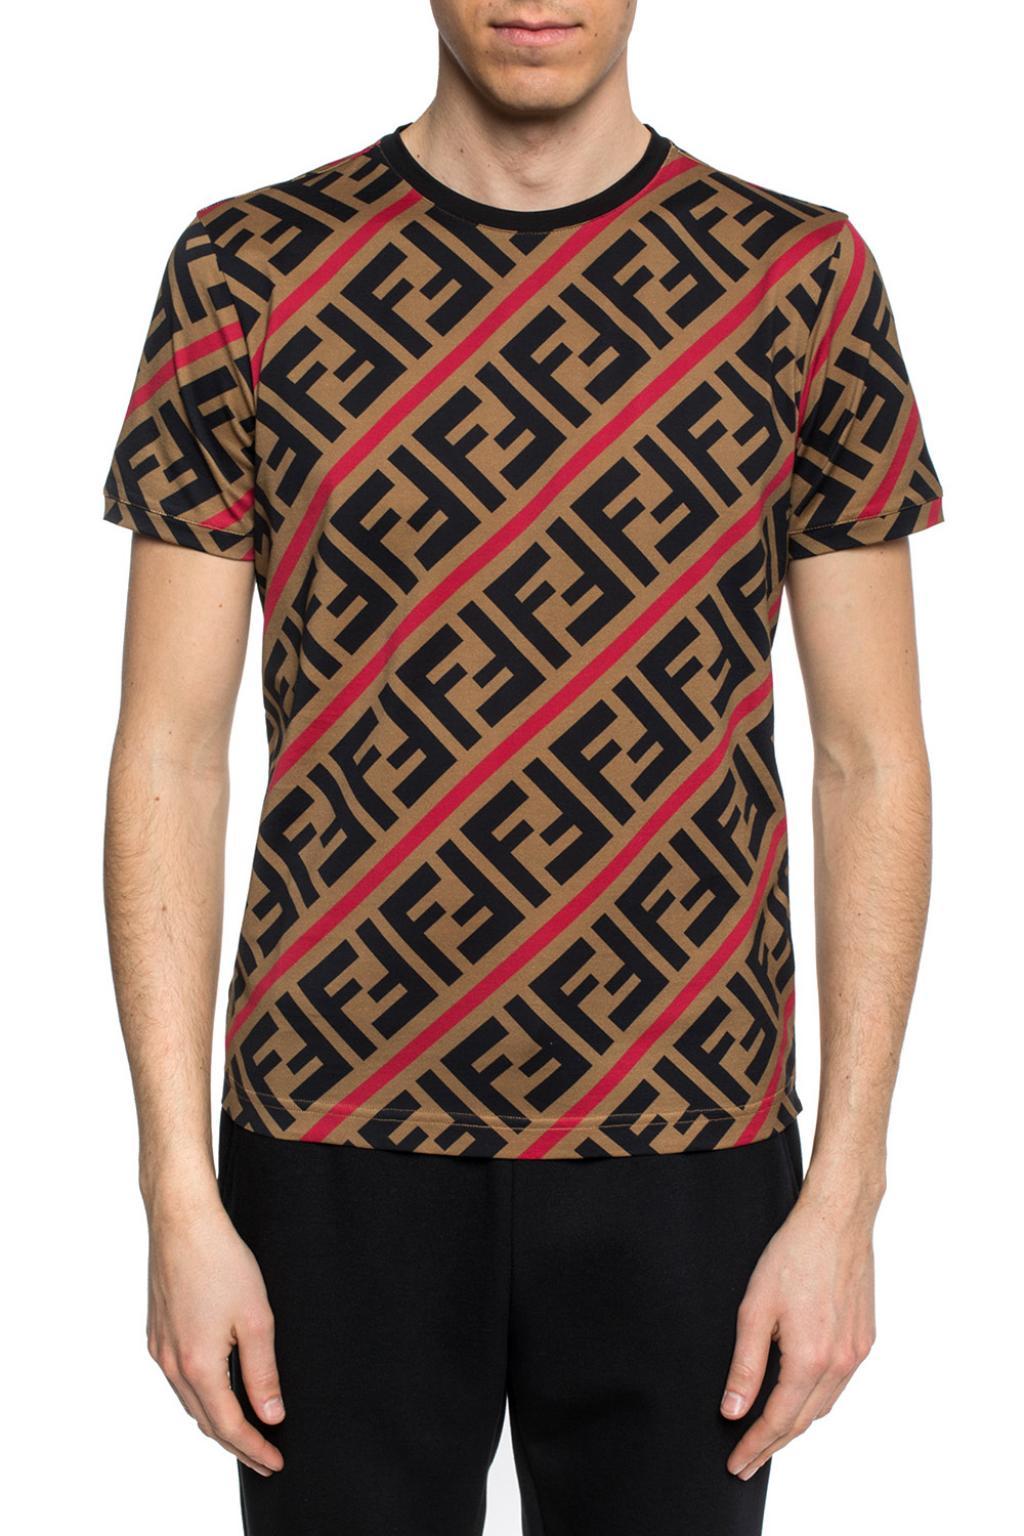 Fendi Cotton Double F Logo T-shirt in Brown for Men - Lyst